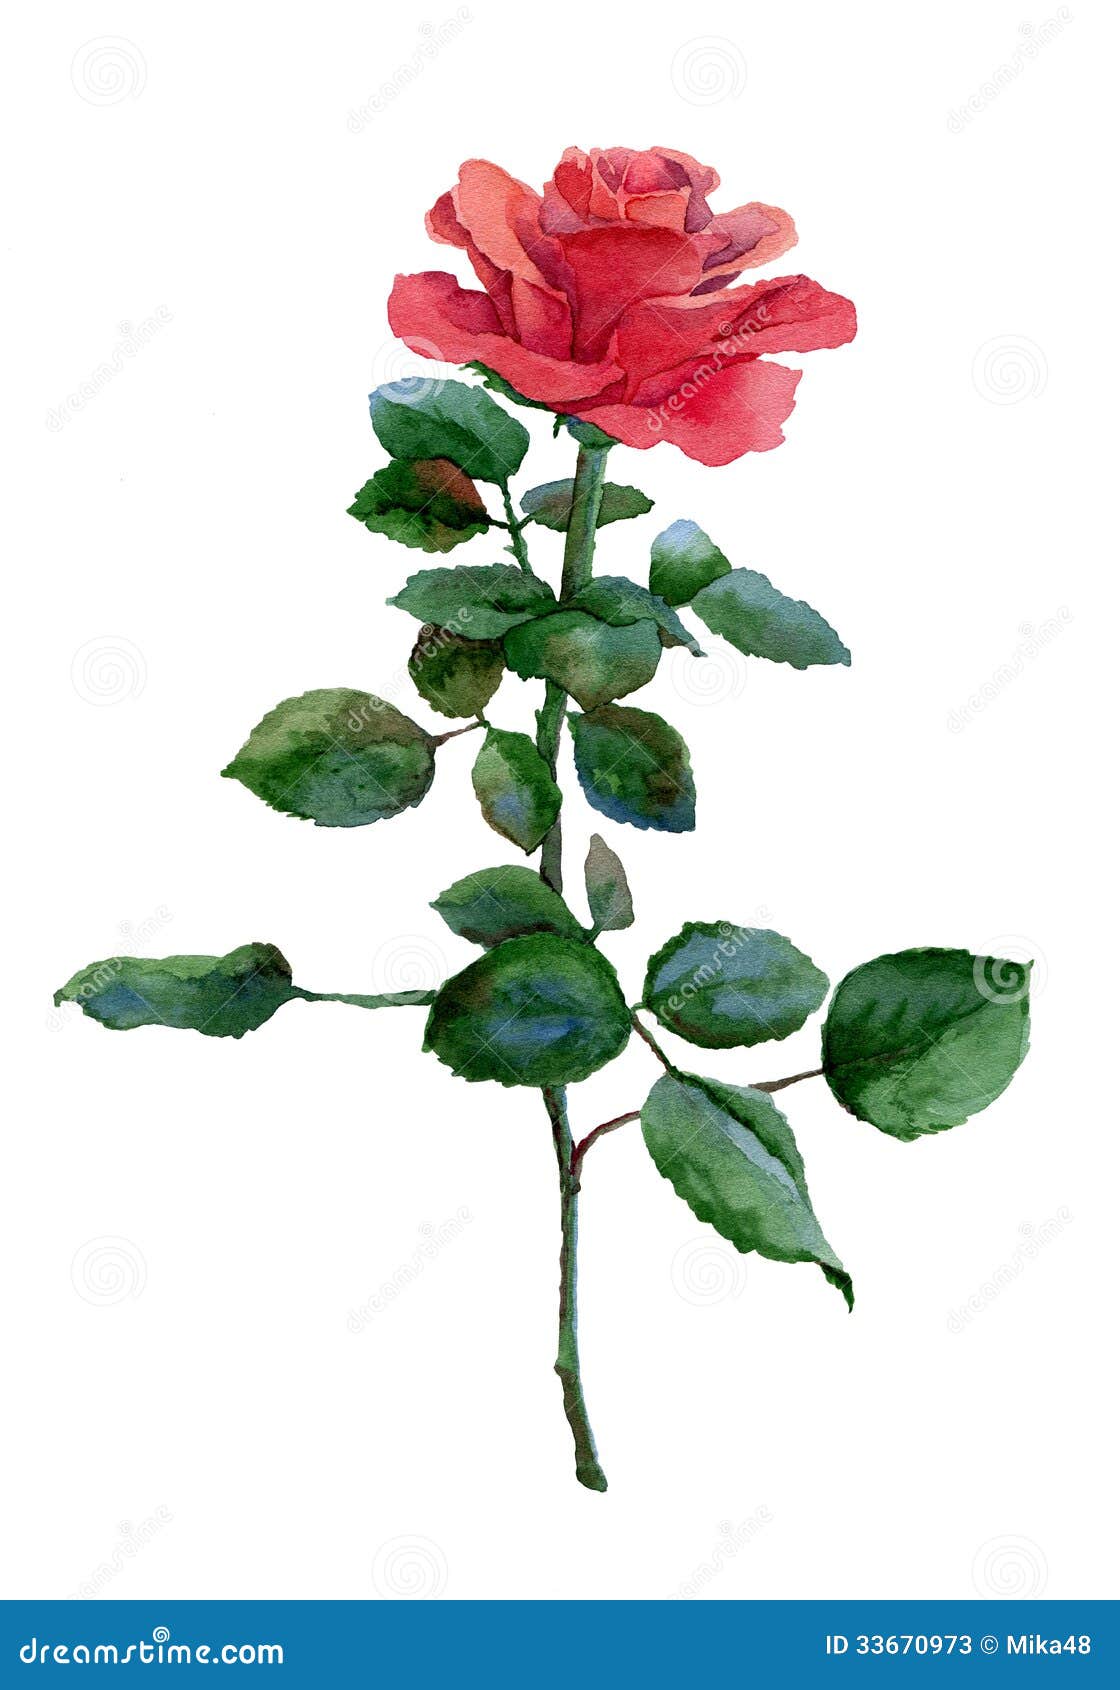 Red rose stock illustration. Illustration of handdrawn - 33670973